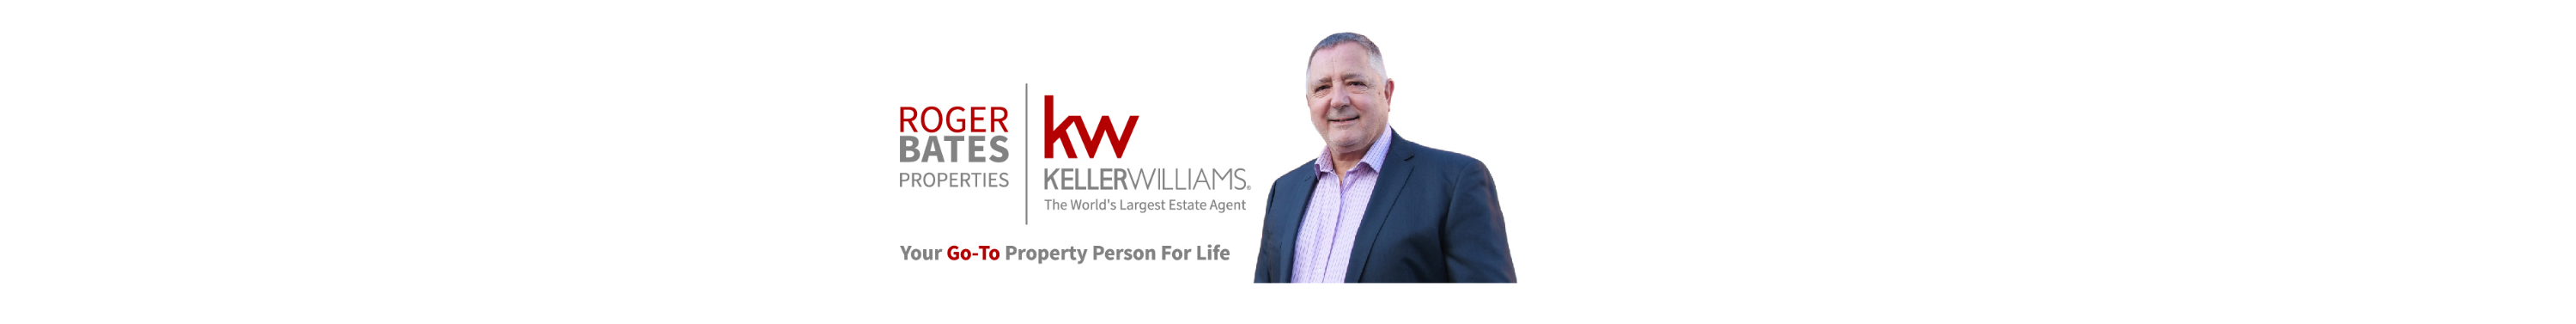 Roger Bates Properties | Keller Williams Estate Agents